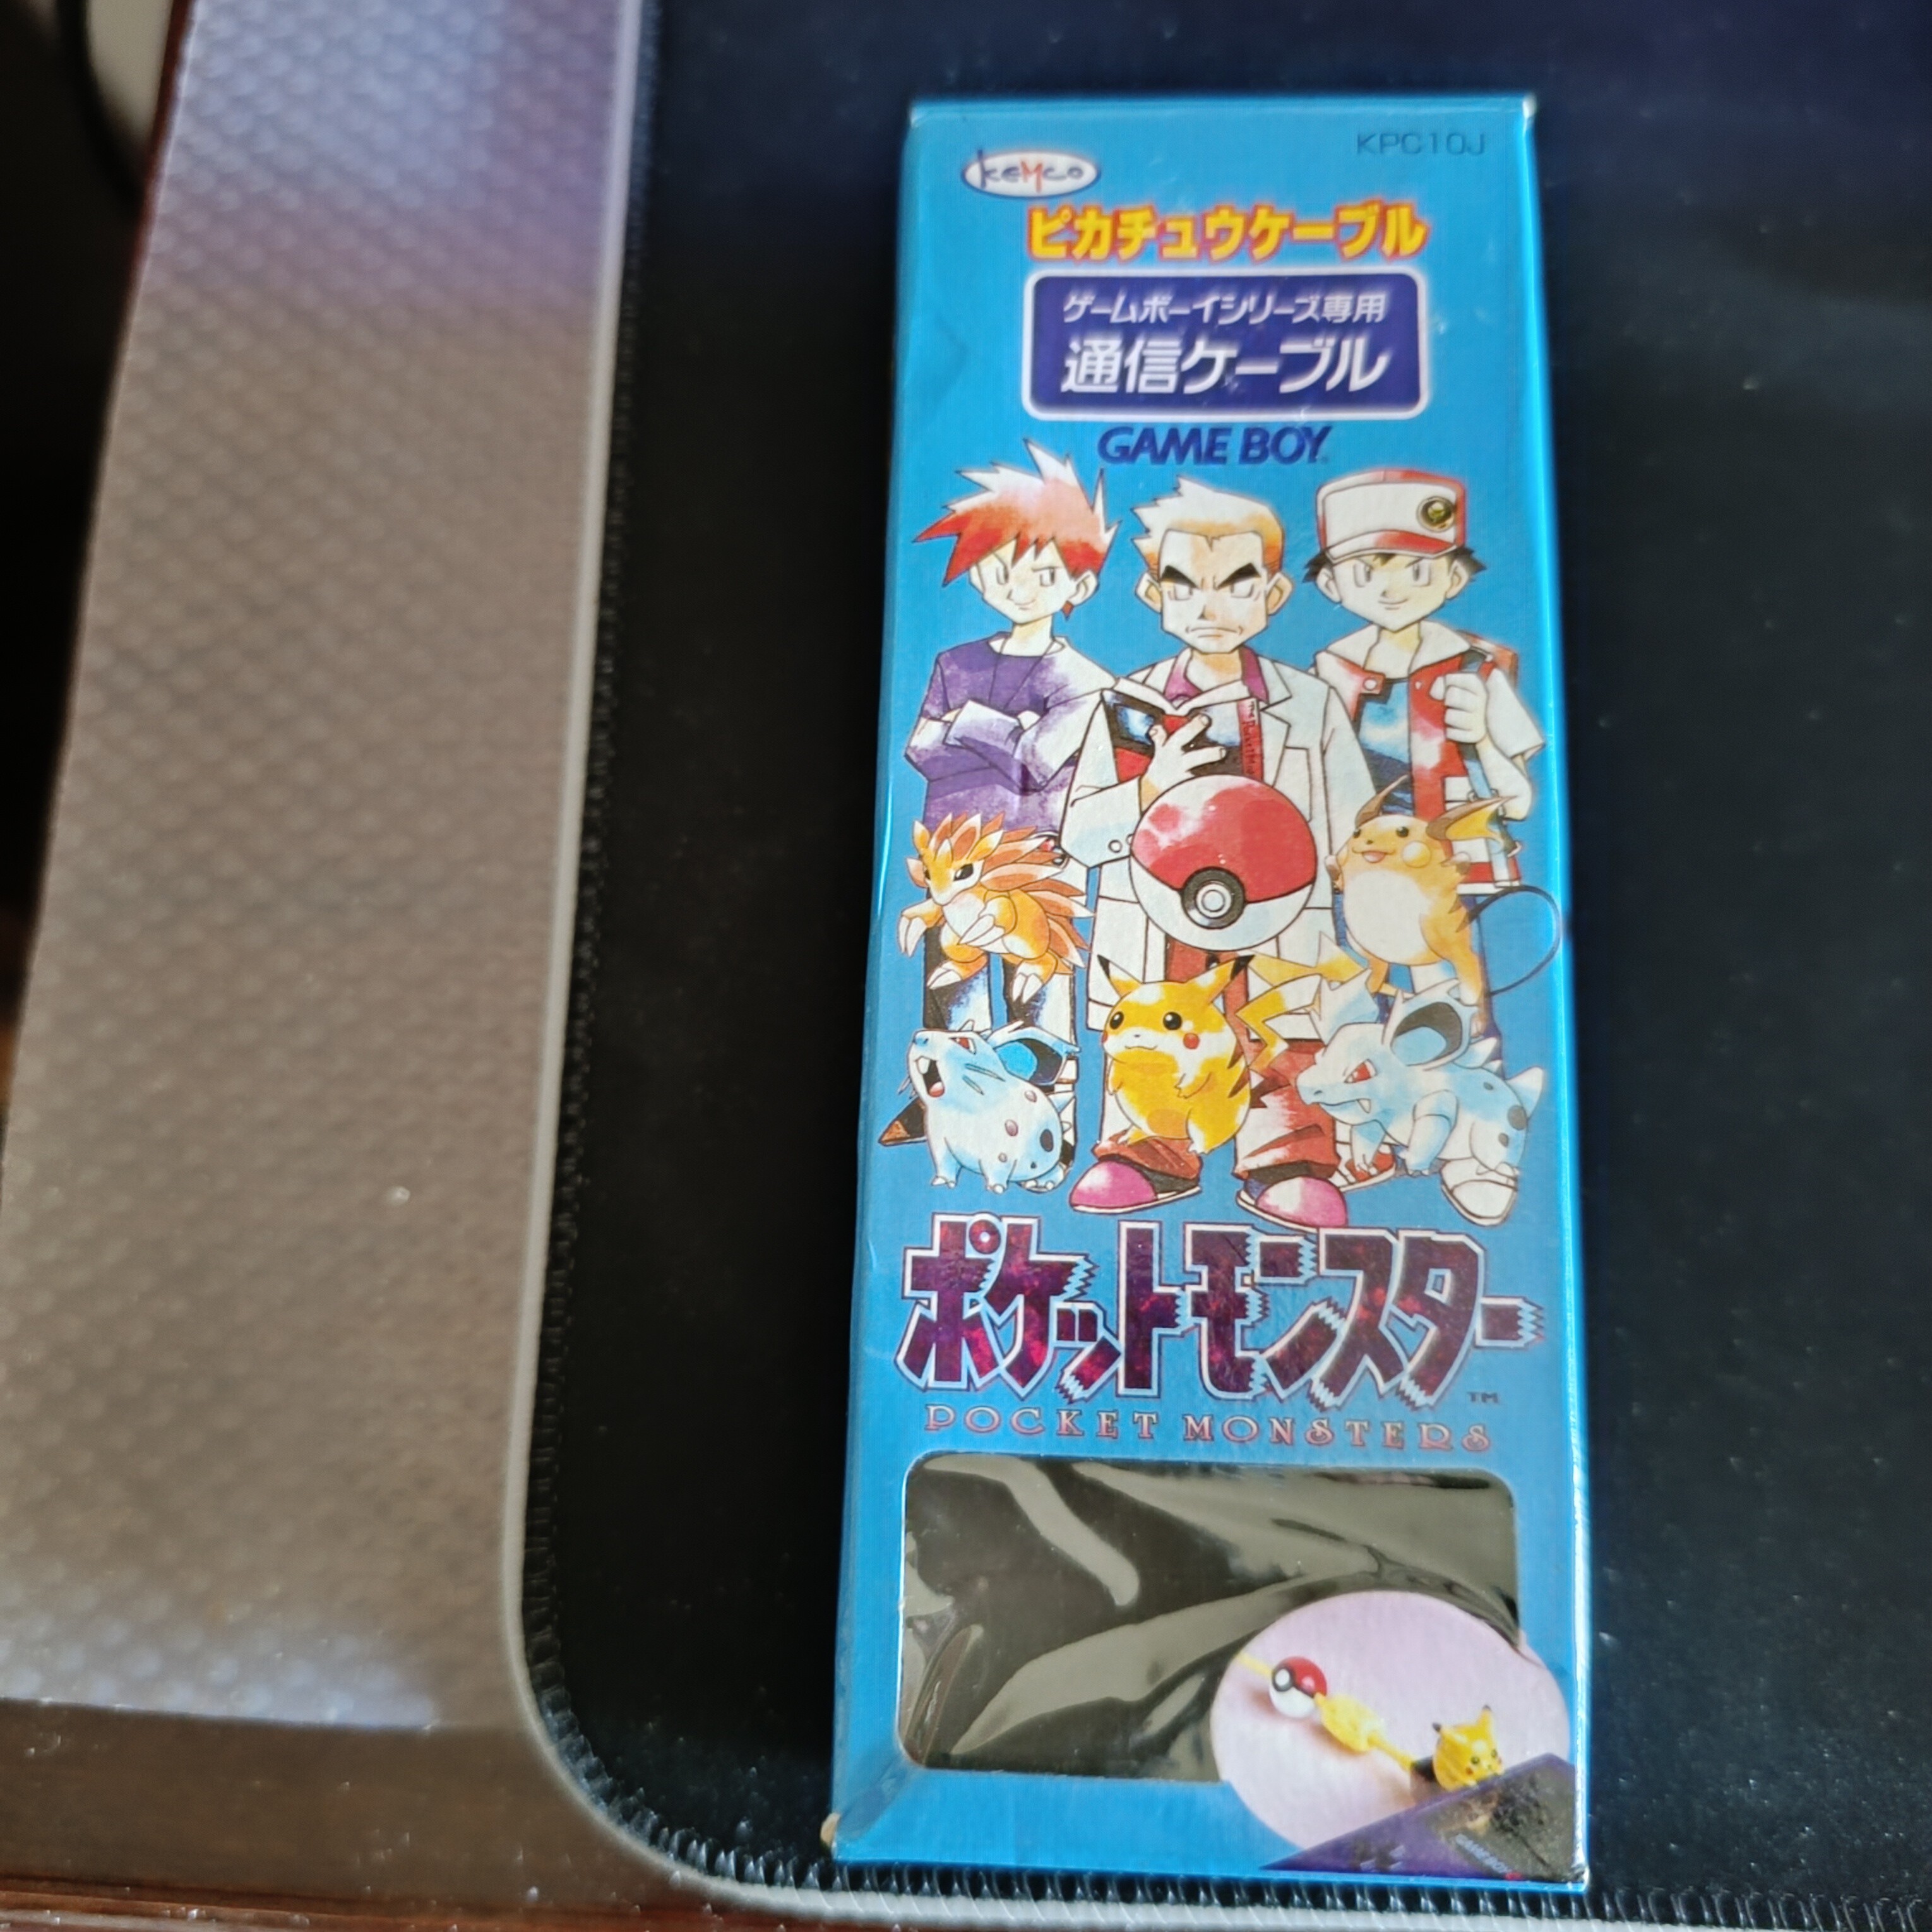 Kemco Game Boy Color Pokémon Pikachu Link Cable